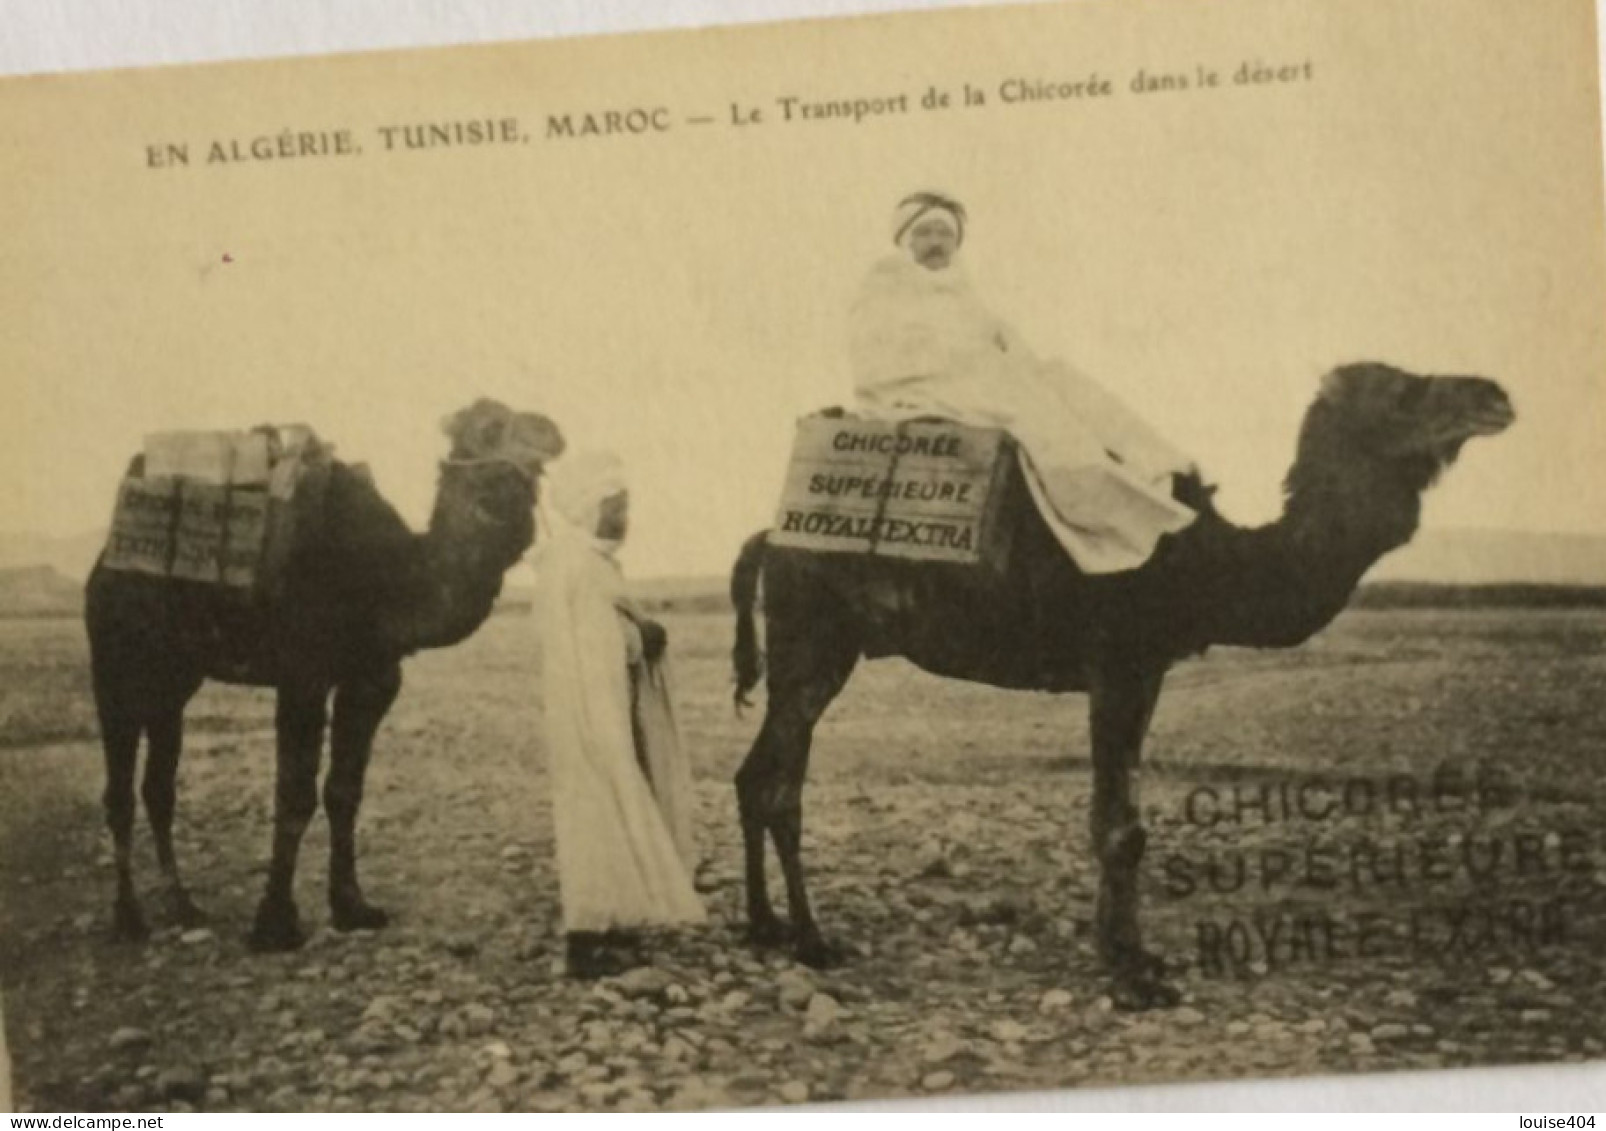 EE ALGERIE MAROC  TUNISIE TRANSPORT DE LA CHICOREE DANS LE DESERT - Beroepen